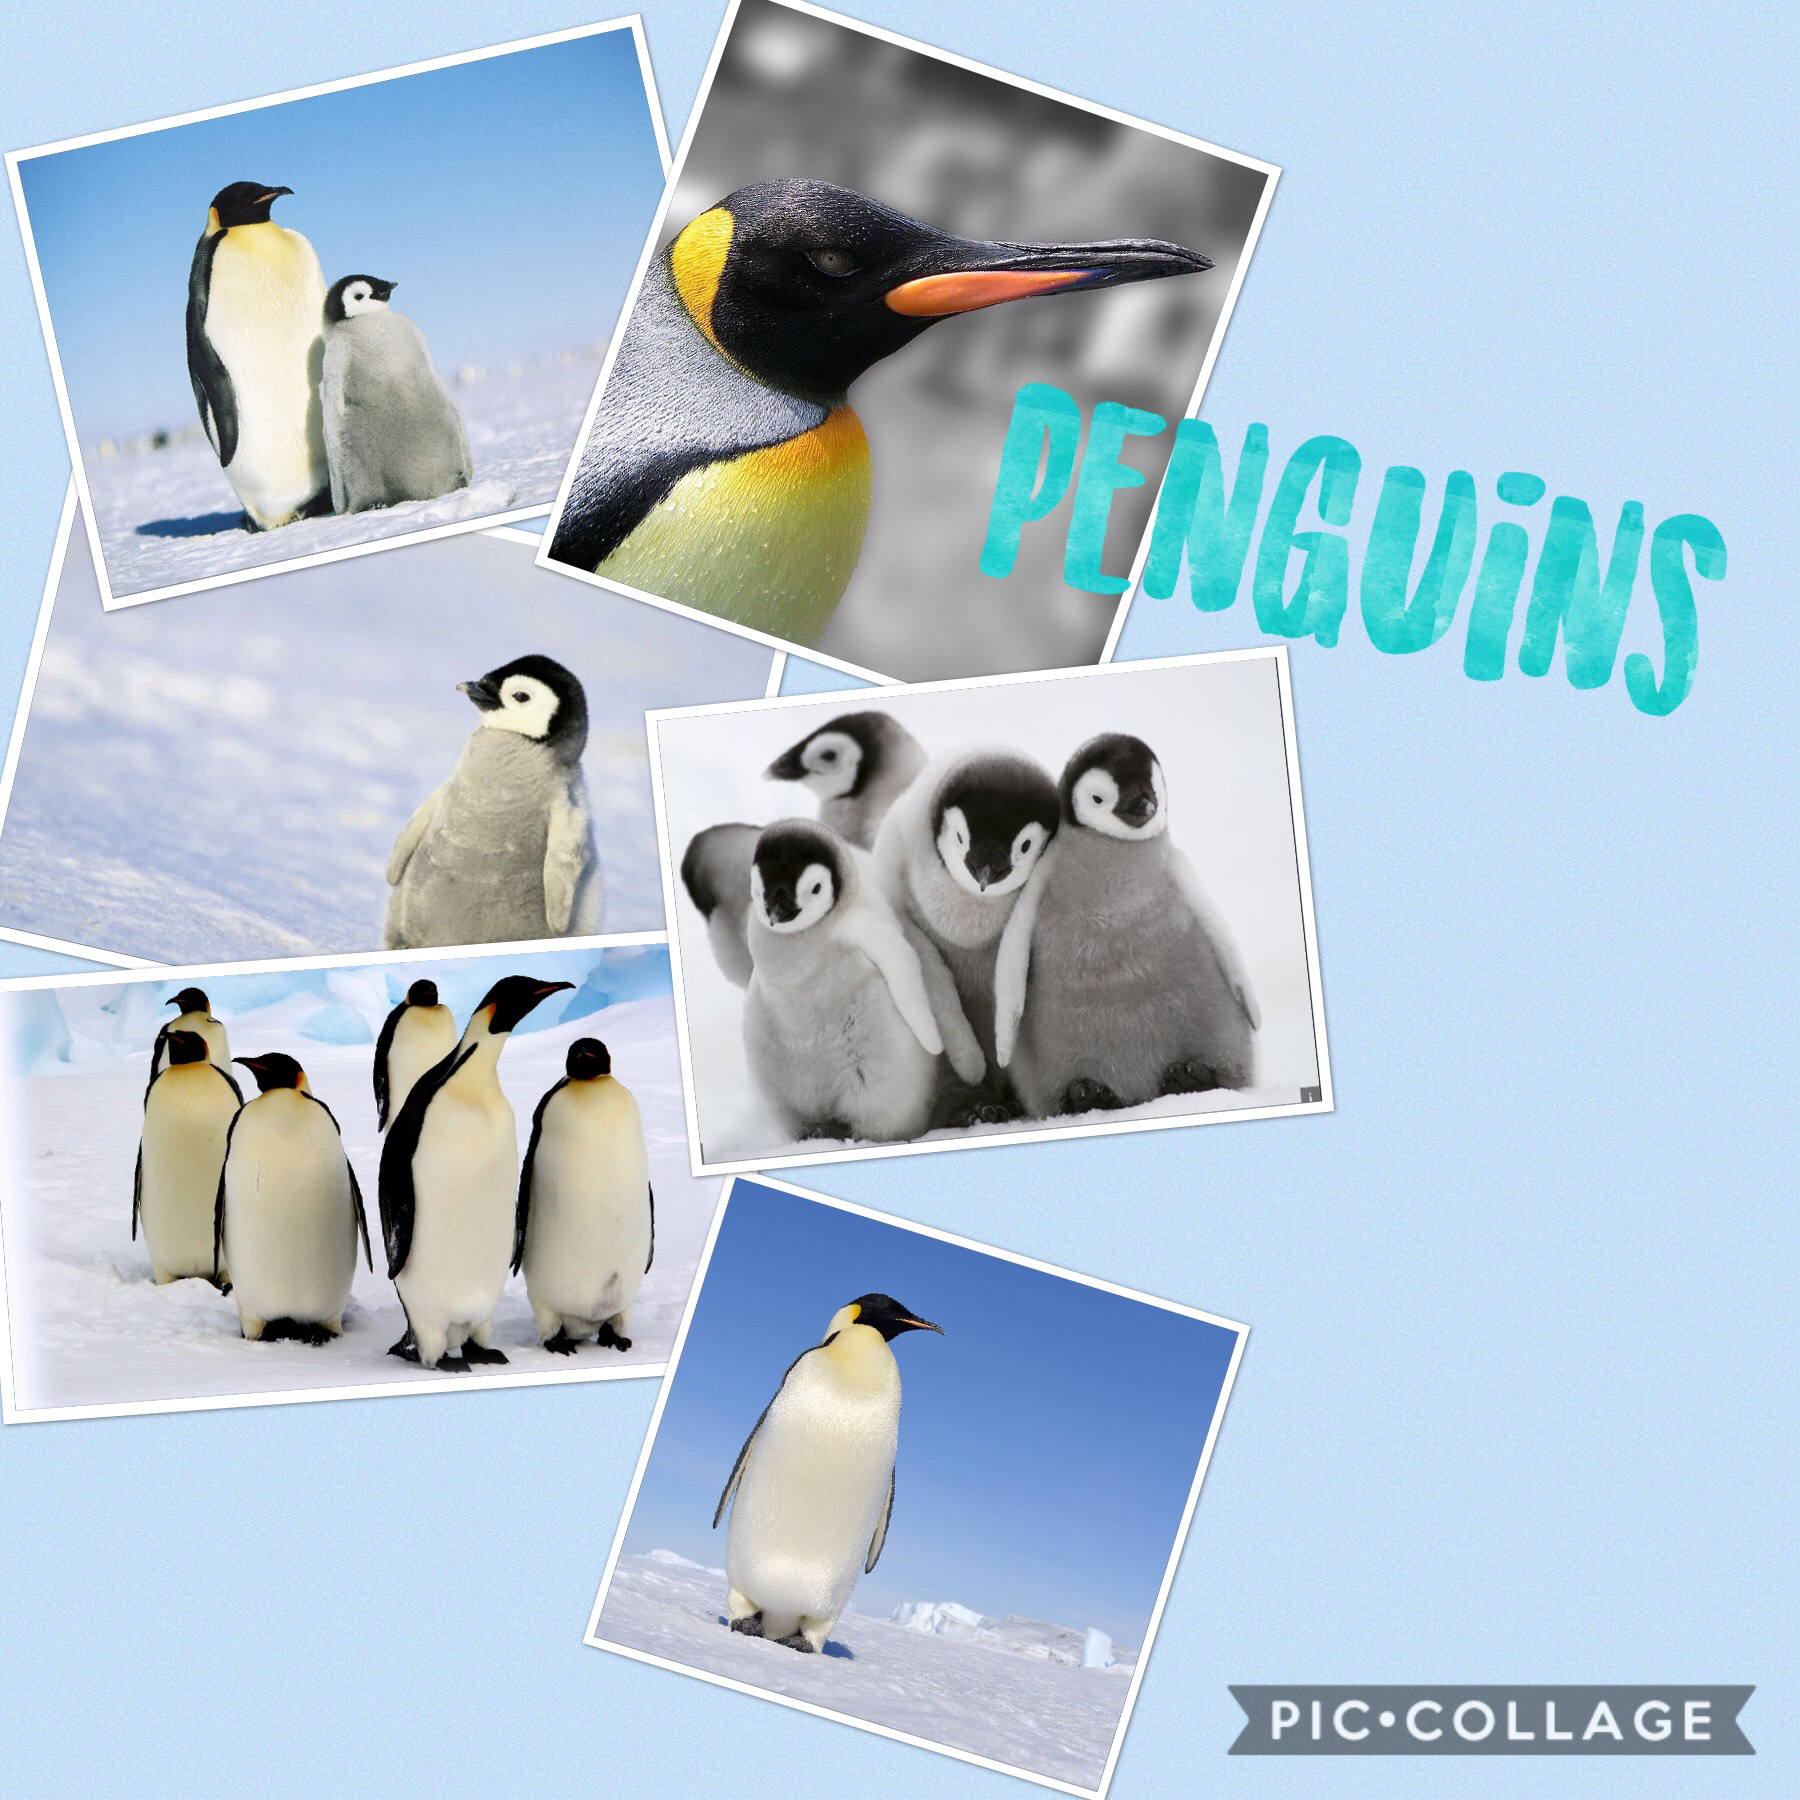 My Essay Topic, Emperor Penguins! Sooo ADORABLE😂